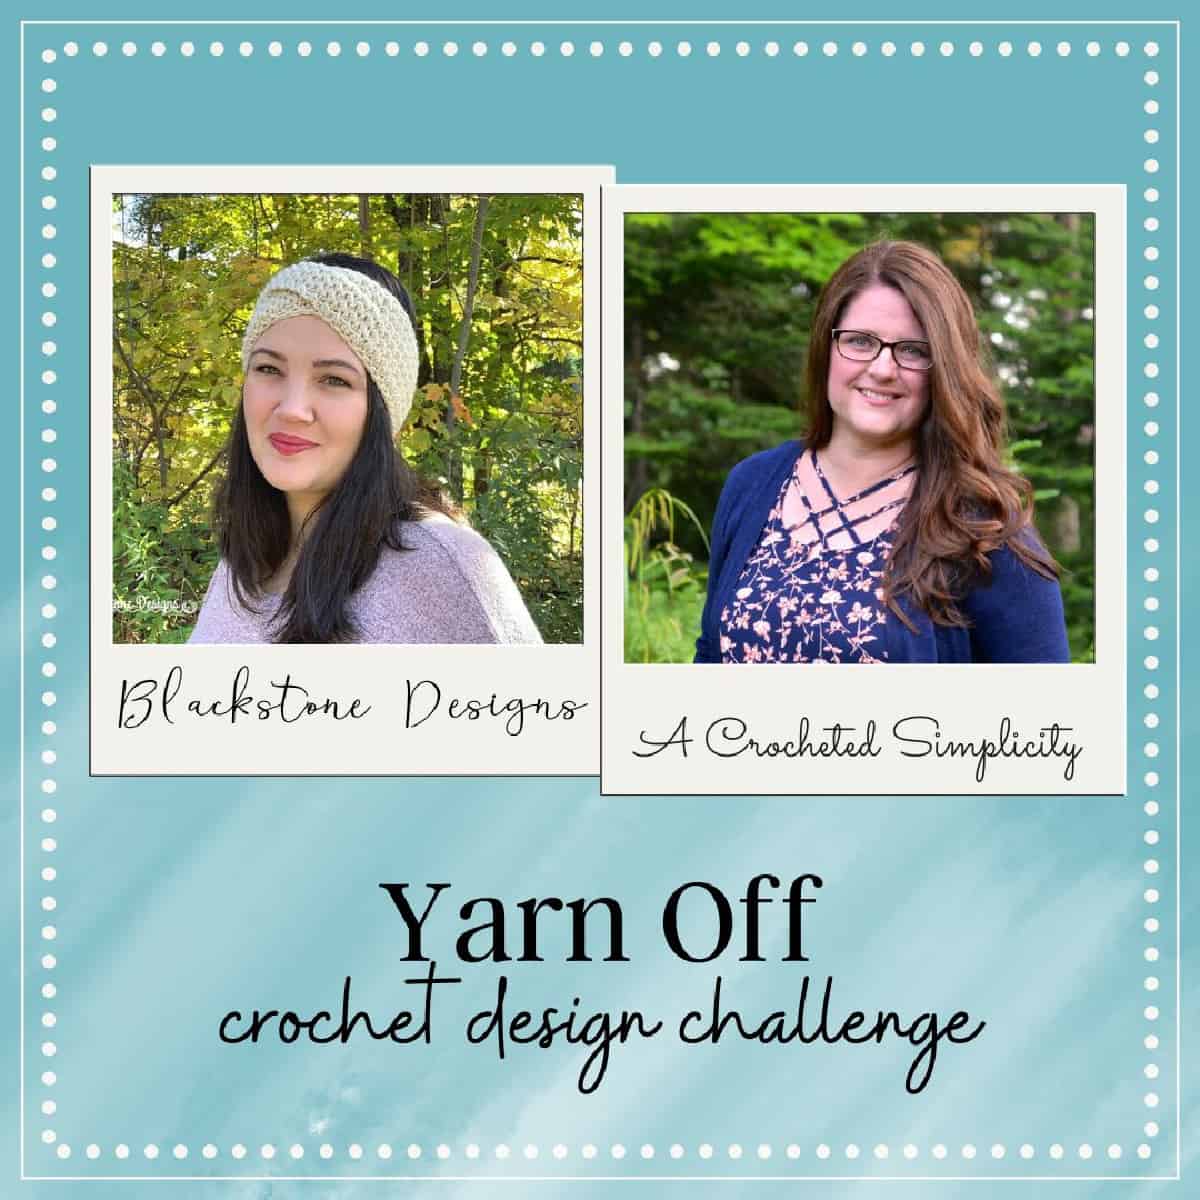 Yarn off crochet design challenge with photos of designers.